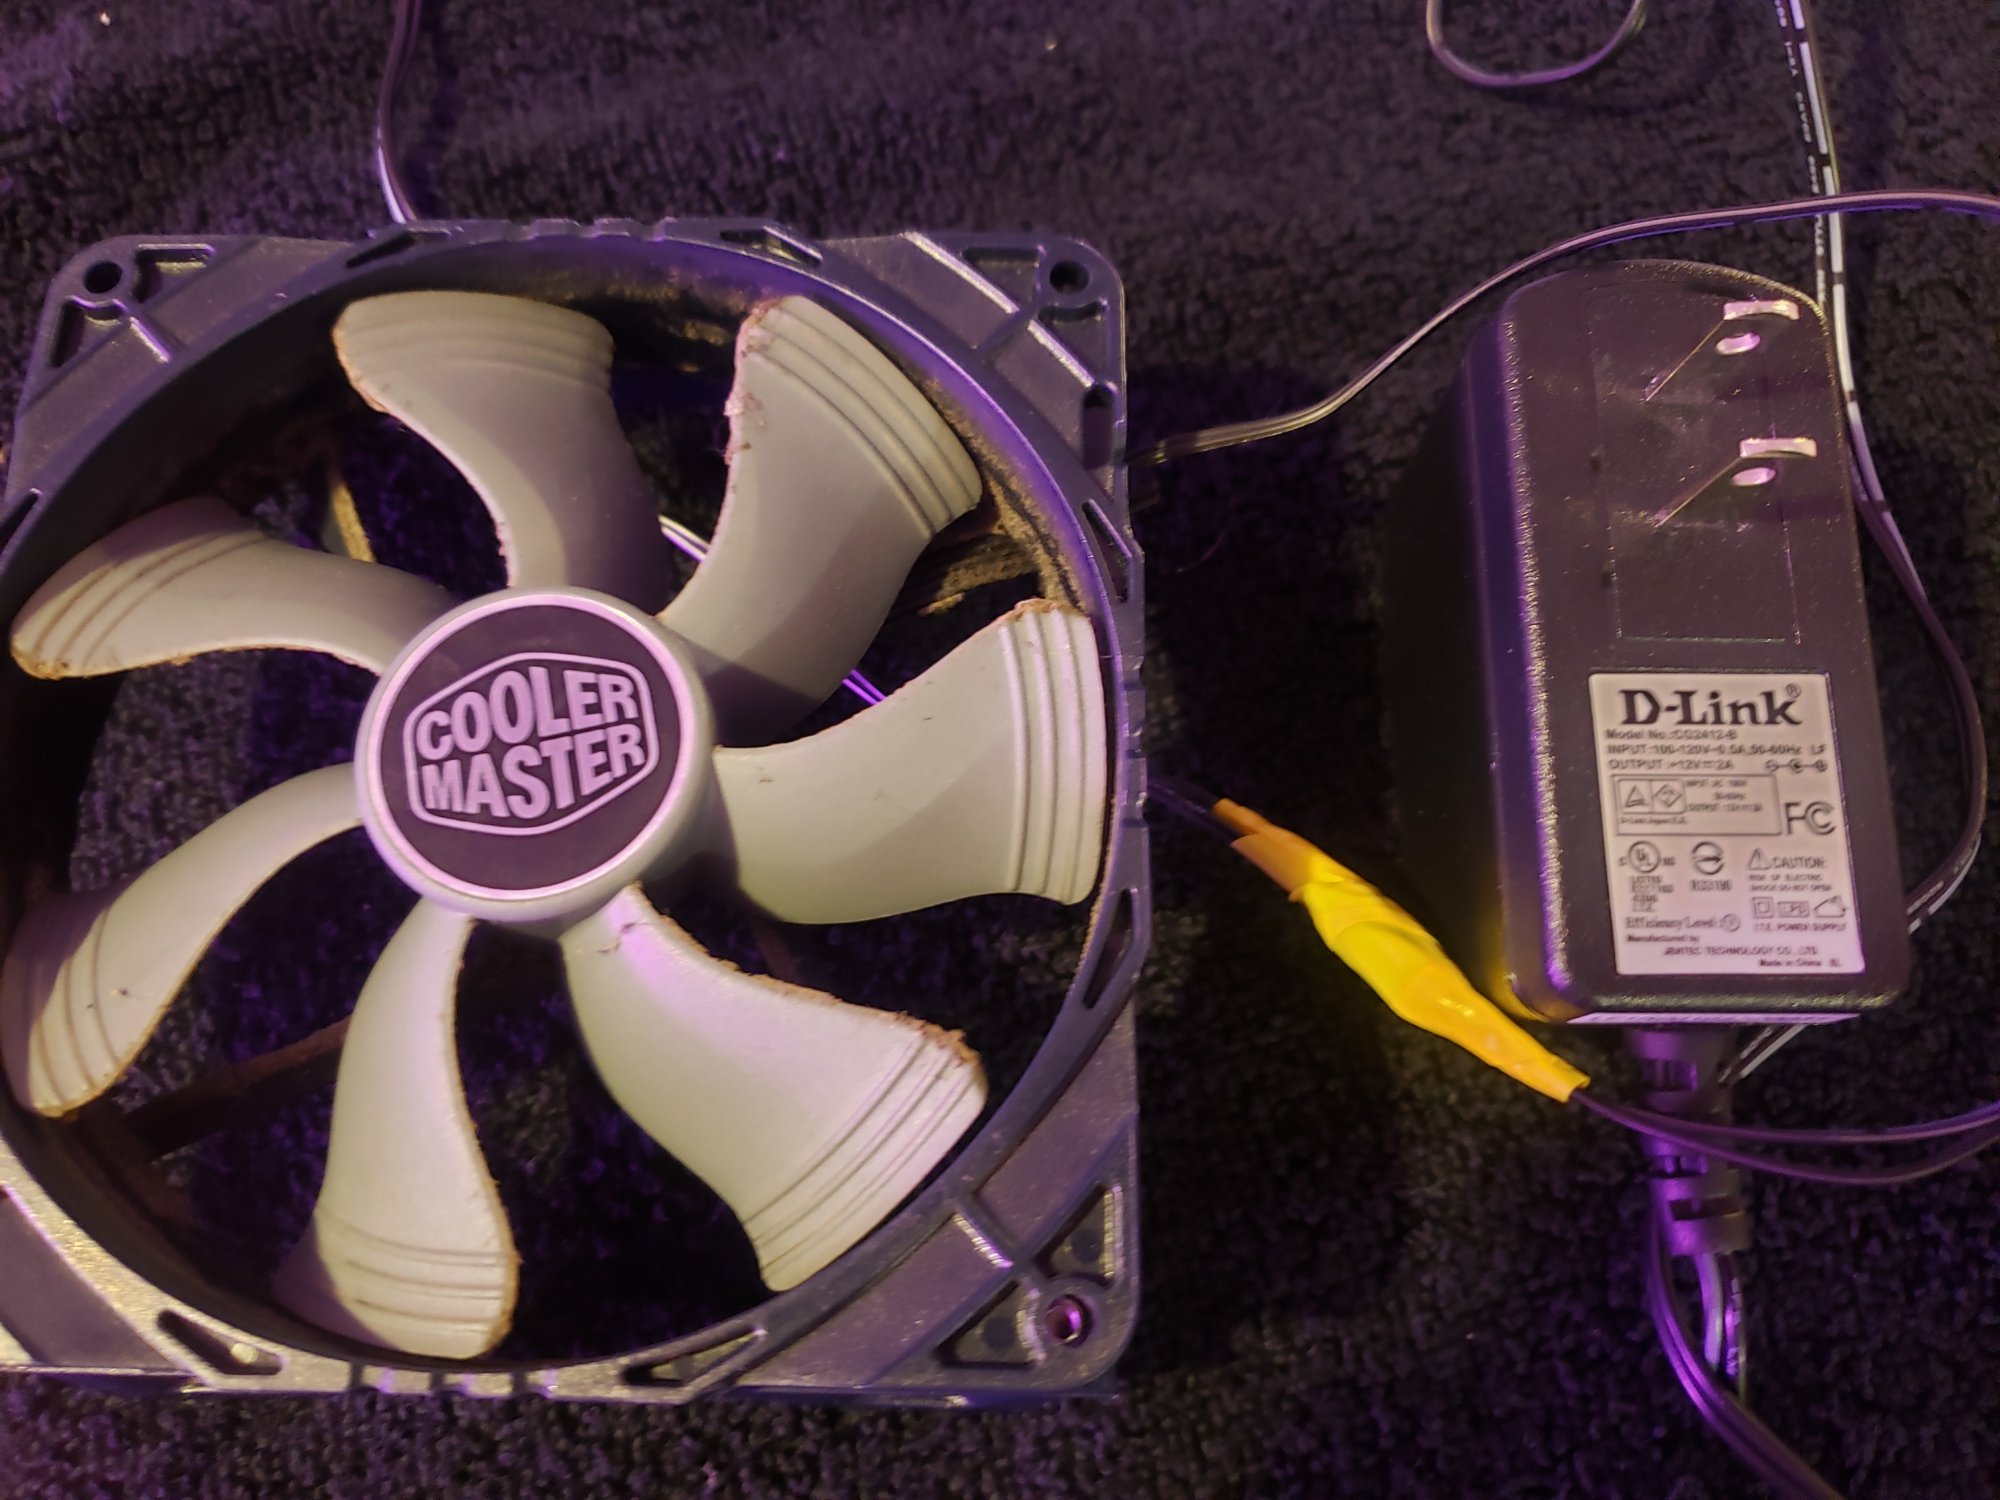 CPU fan wired to 12v dlink